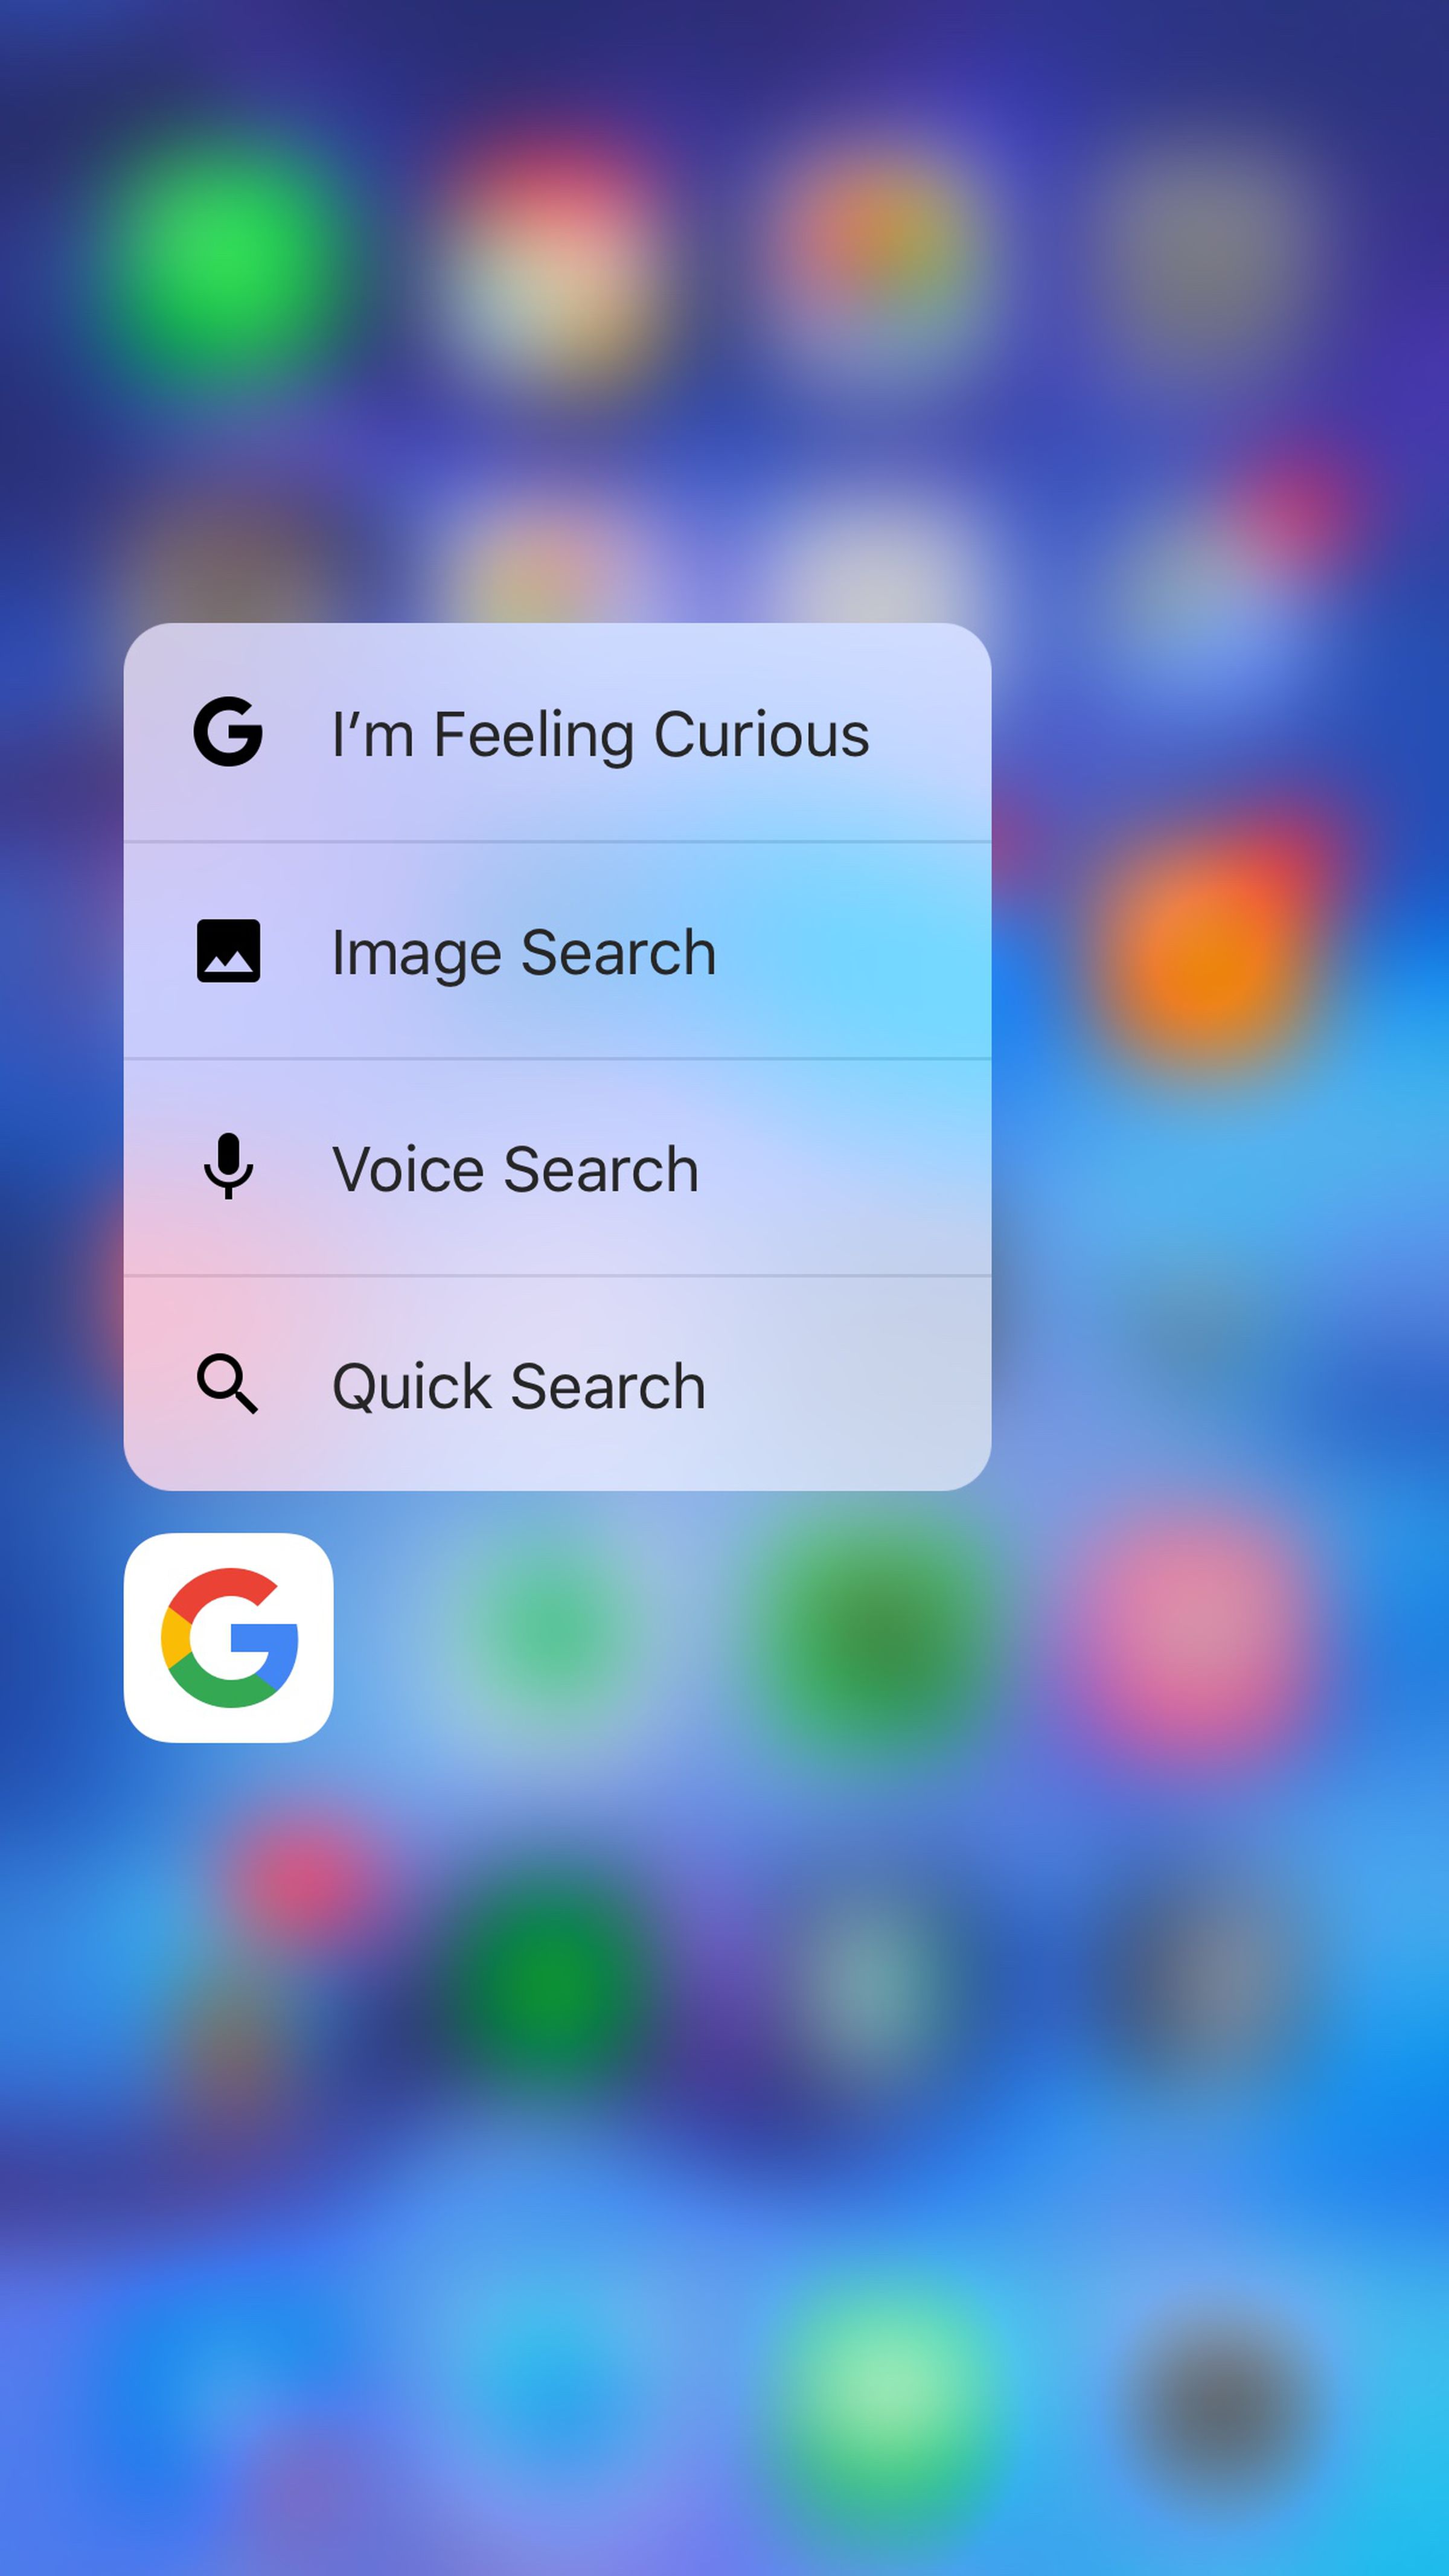 Google for iOS 'I'm Feeling Curious' screenshots